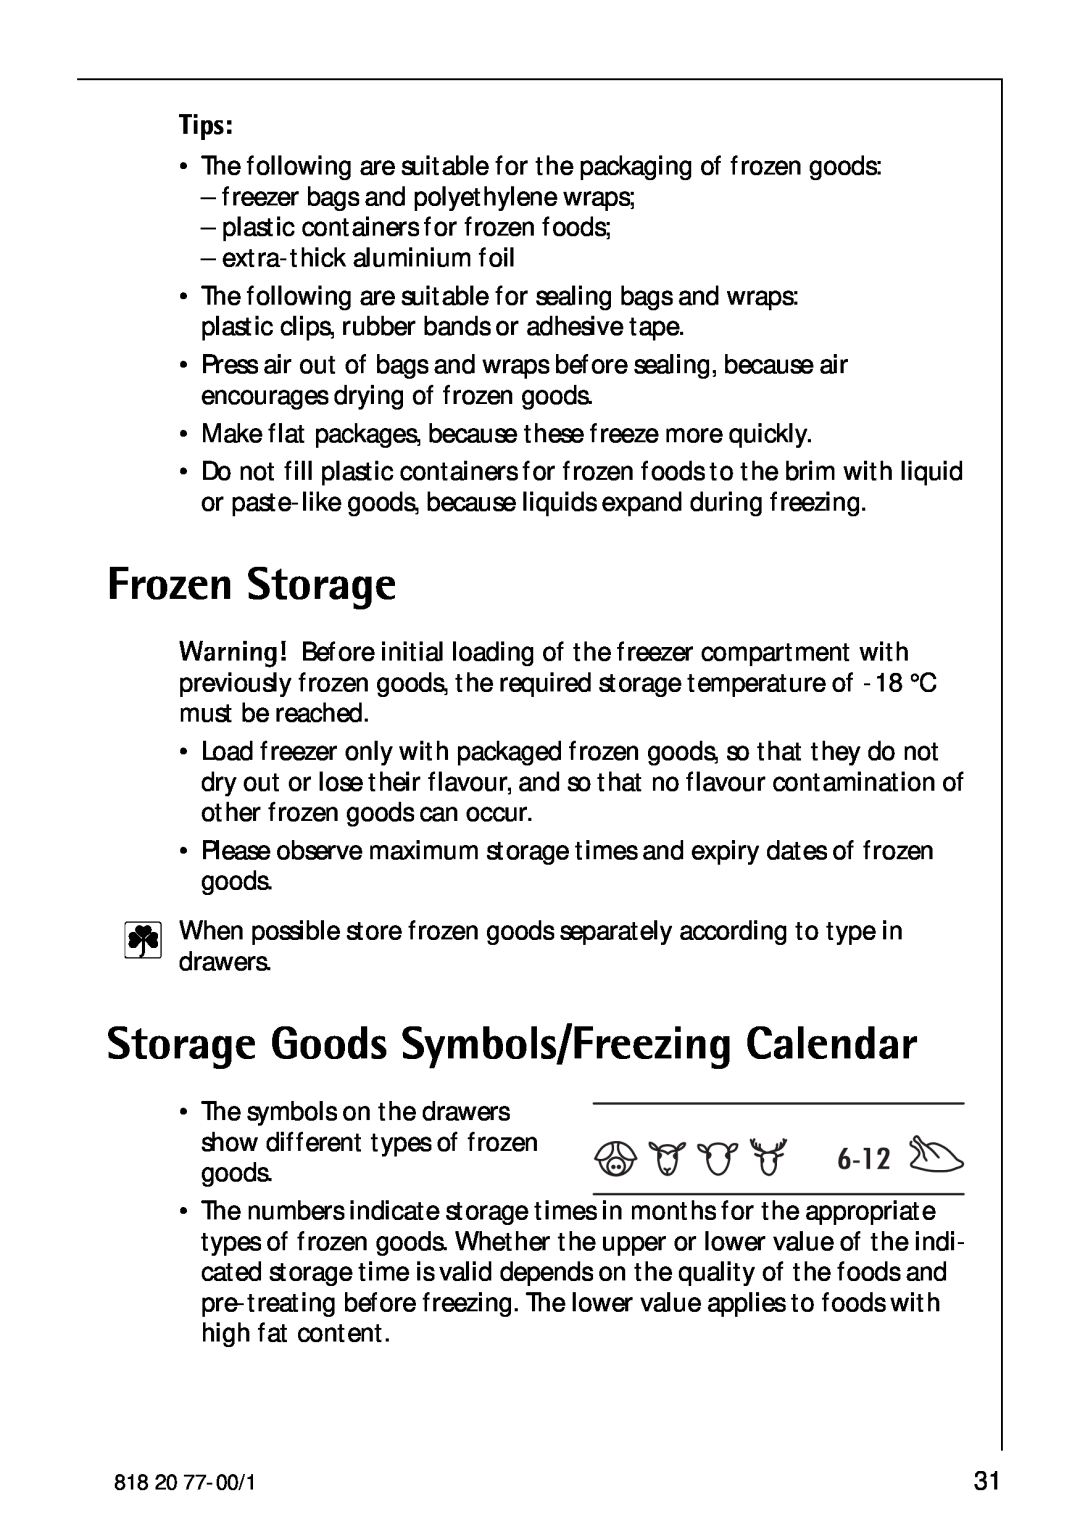 Electrolux 3985-7 KG manual Frozen Storage, Storage Goods Symbols/Freezing Calendar, Tips 